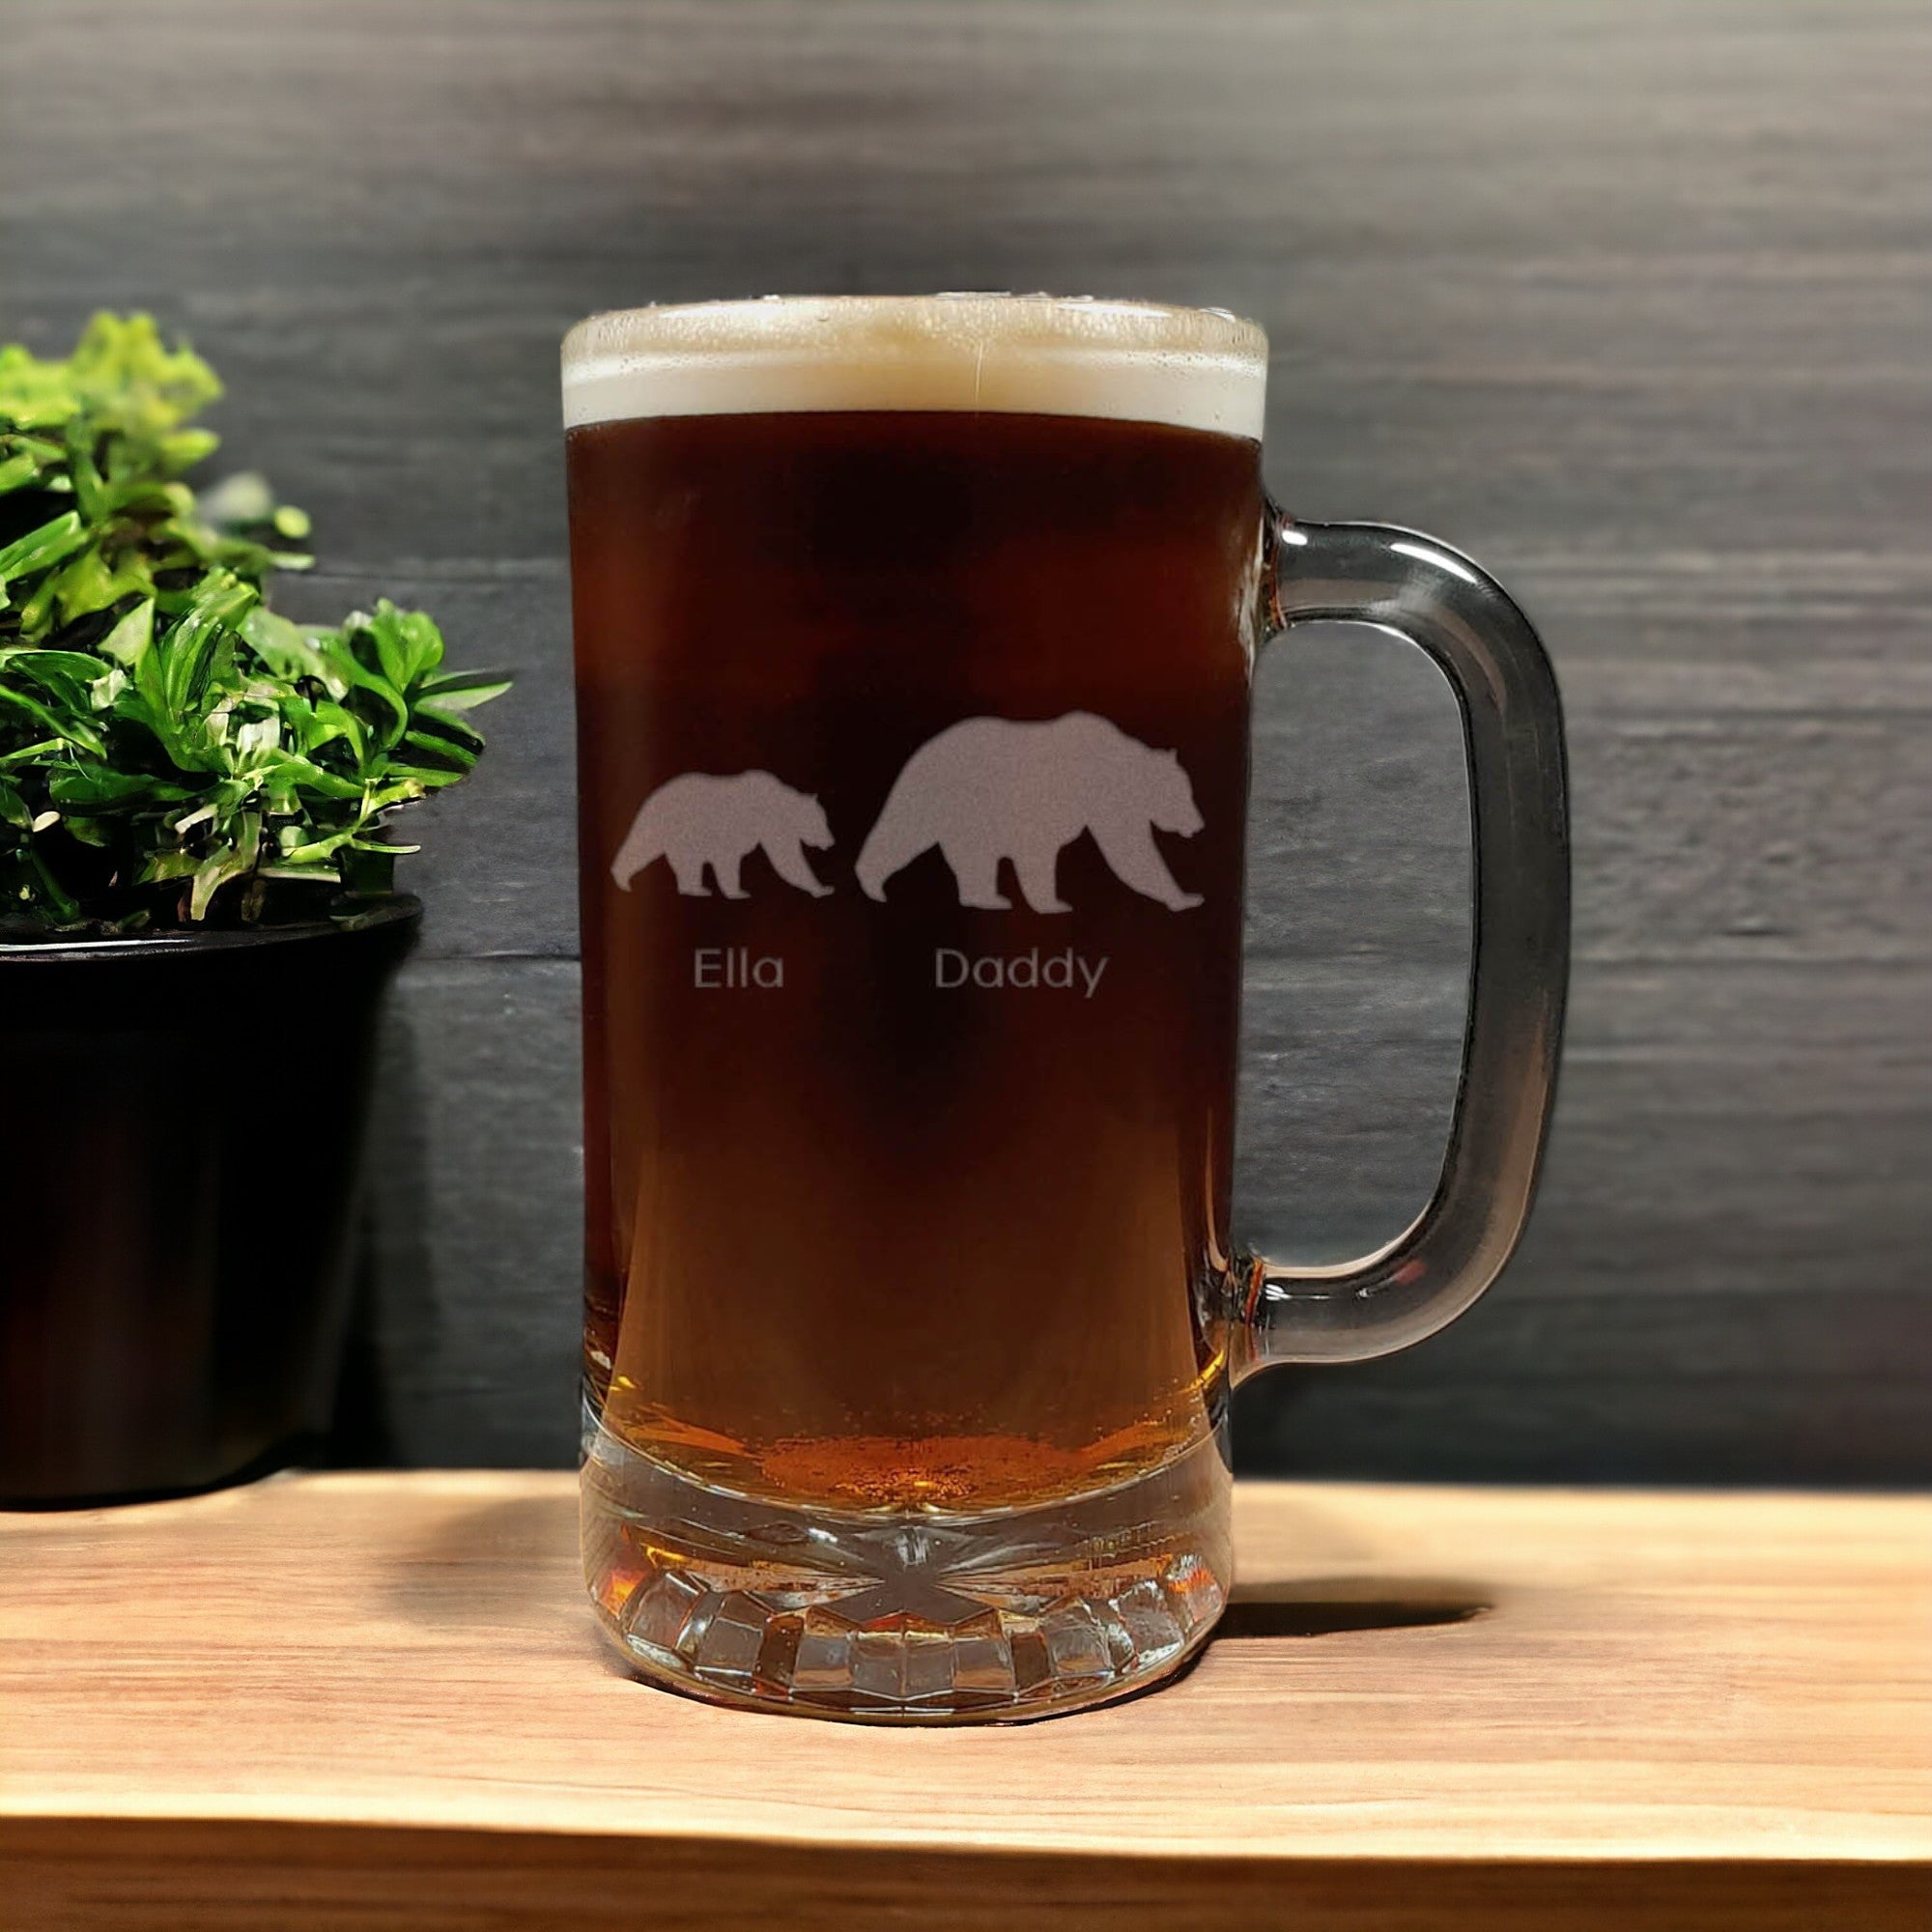 Bear and Cub Beer Mug with Dark Beer - Copyright Hues in Glass